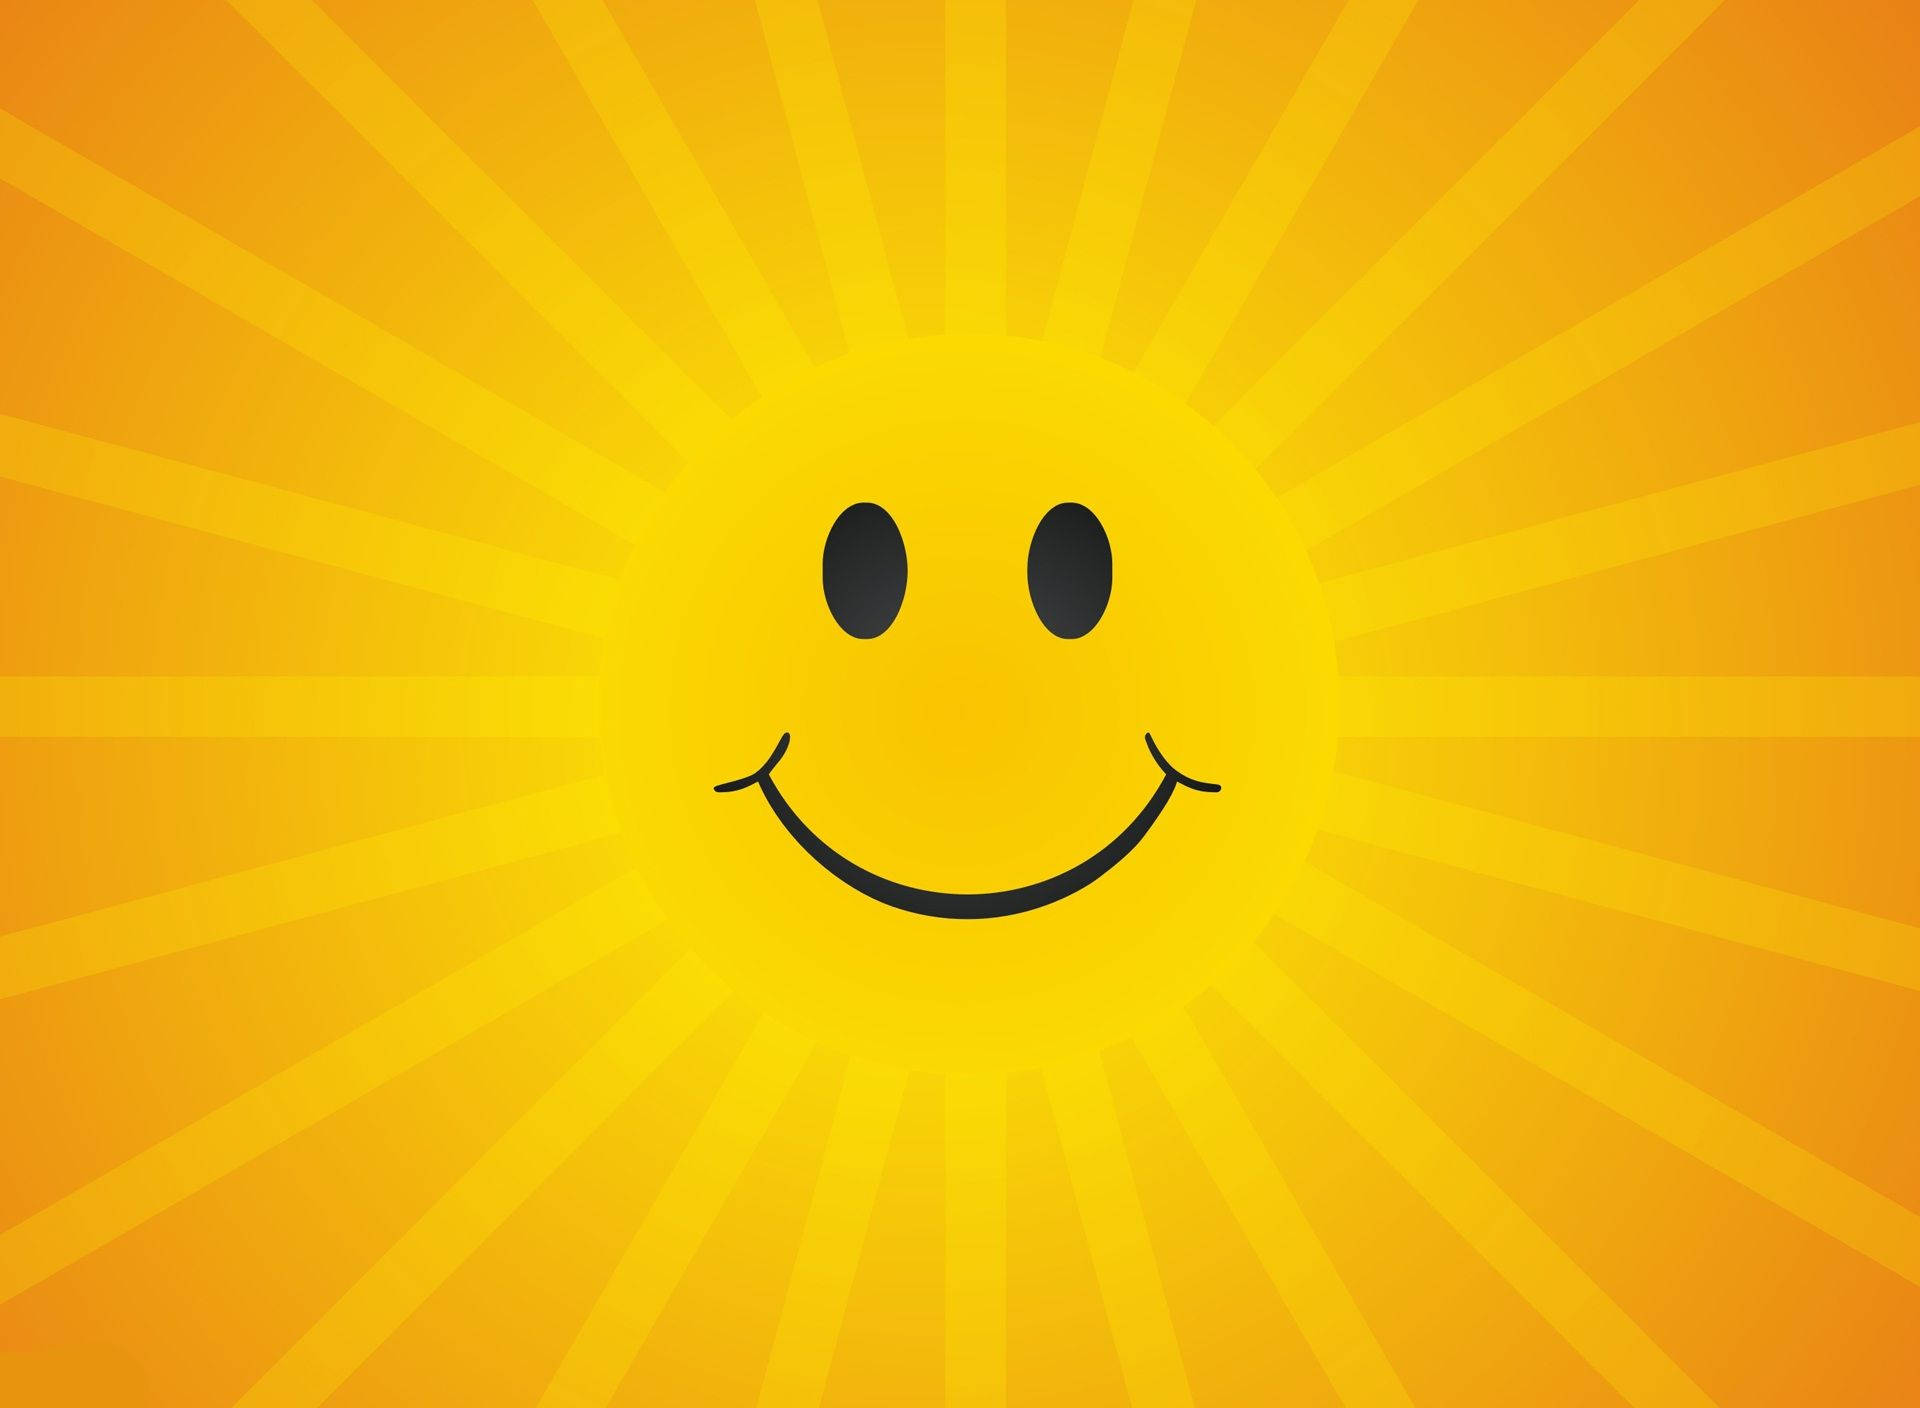 Vibrant Smiling Sun Illustration Wallpaper